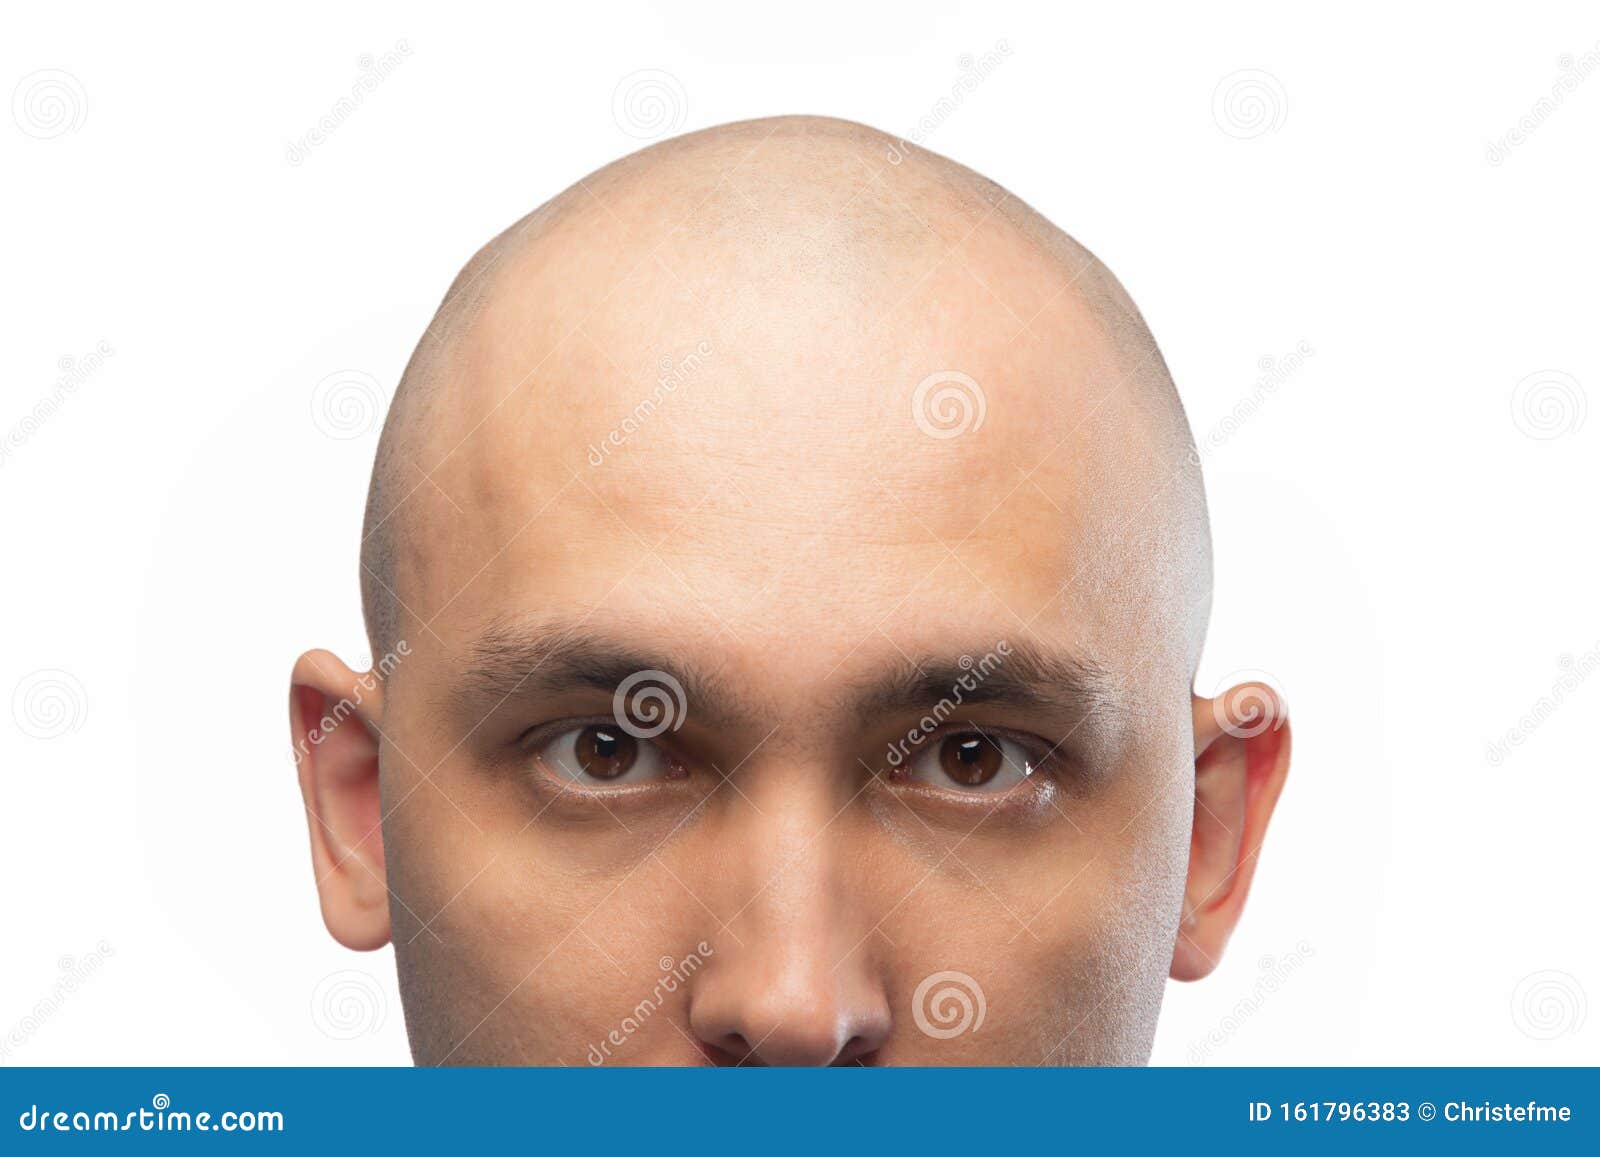 White guy shaved head